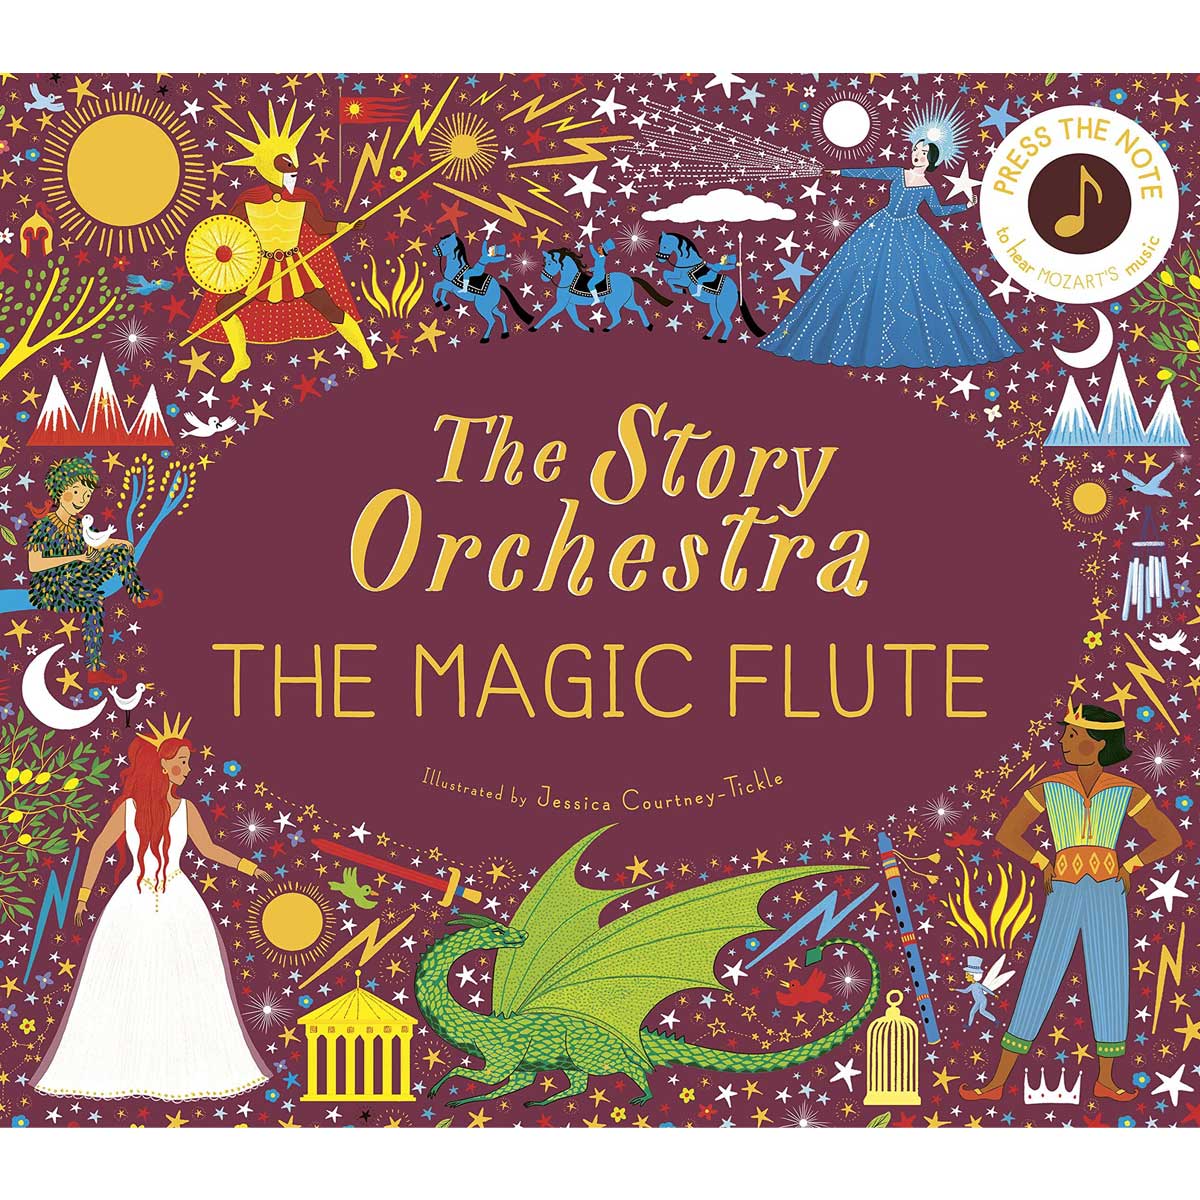 BS The Magic Flute by Jessica Courtney-Tickle & Katy Flint